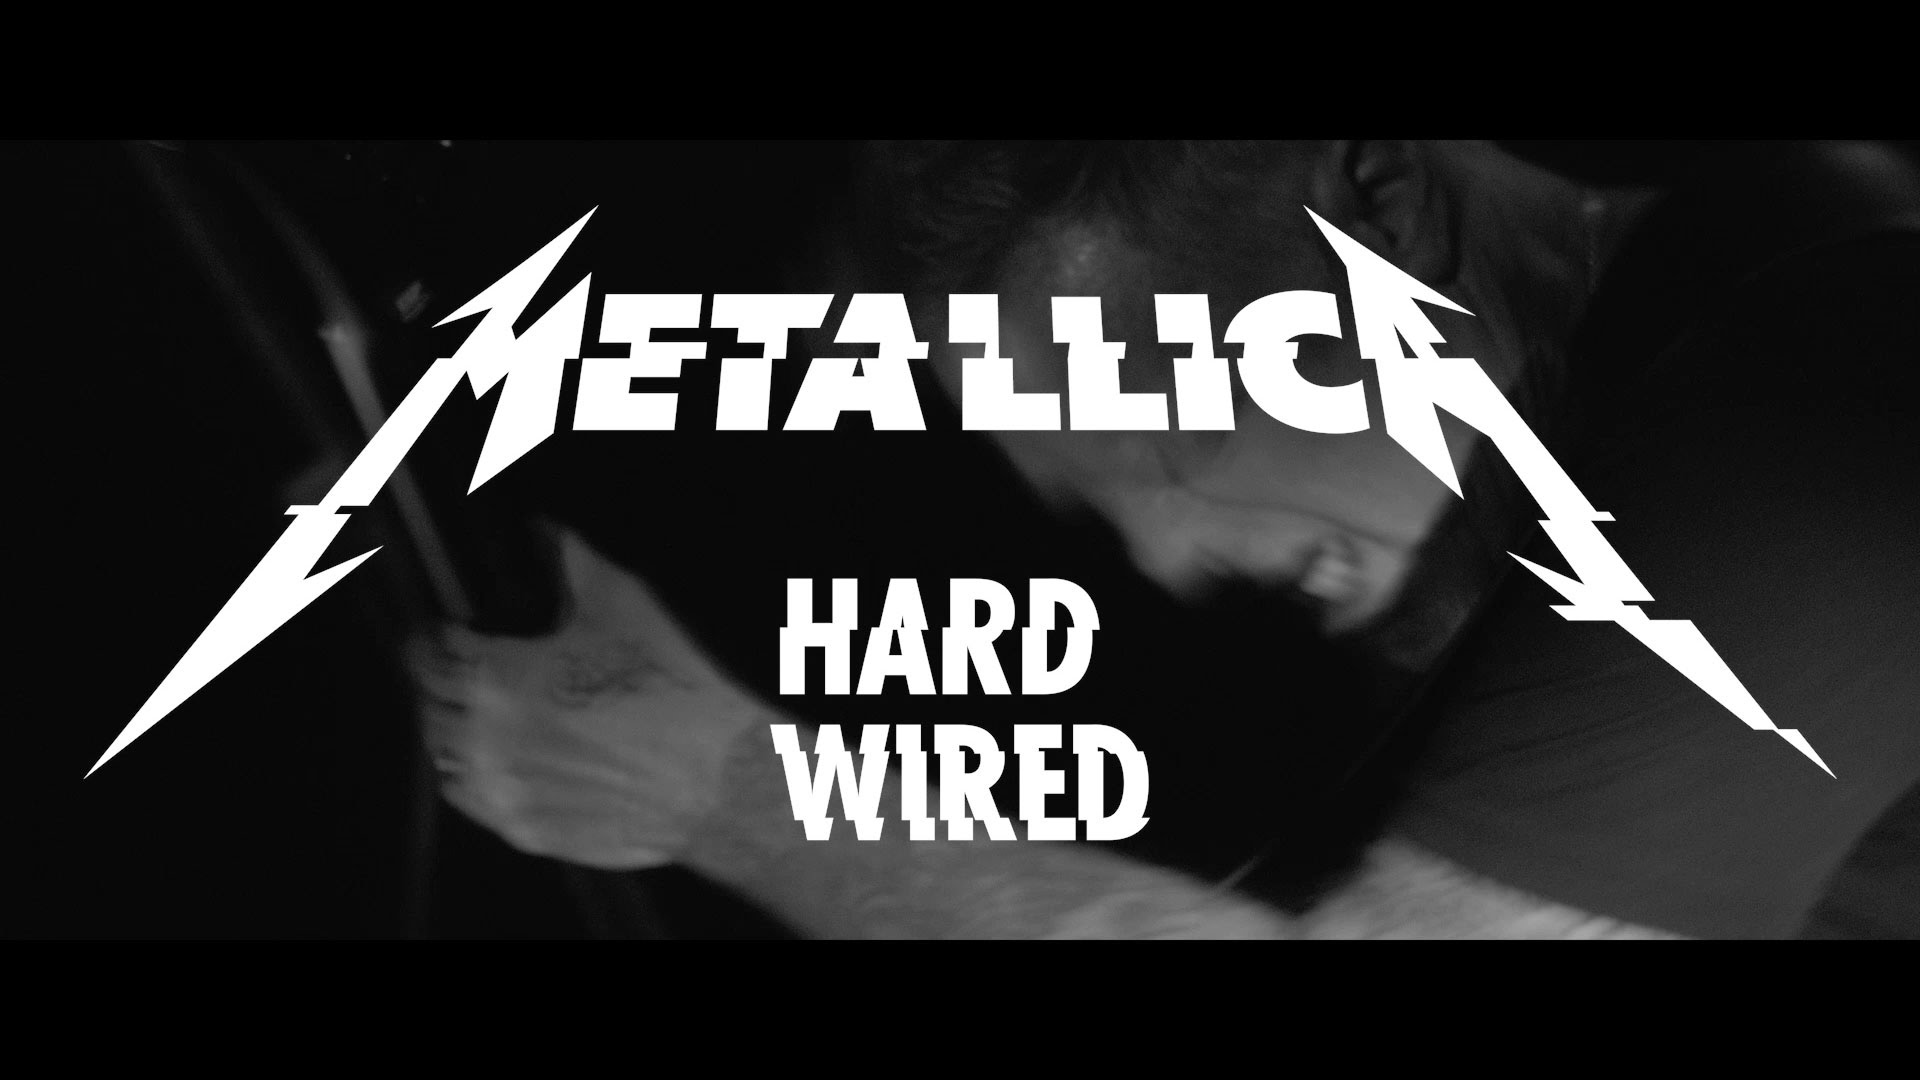 Amazing Metallica Pictures & Backgrounds